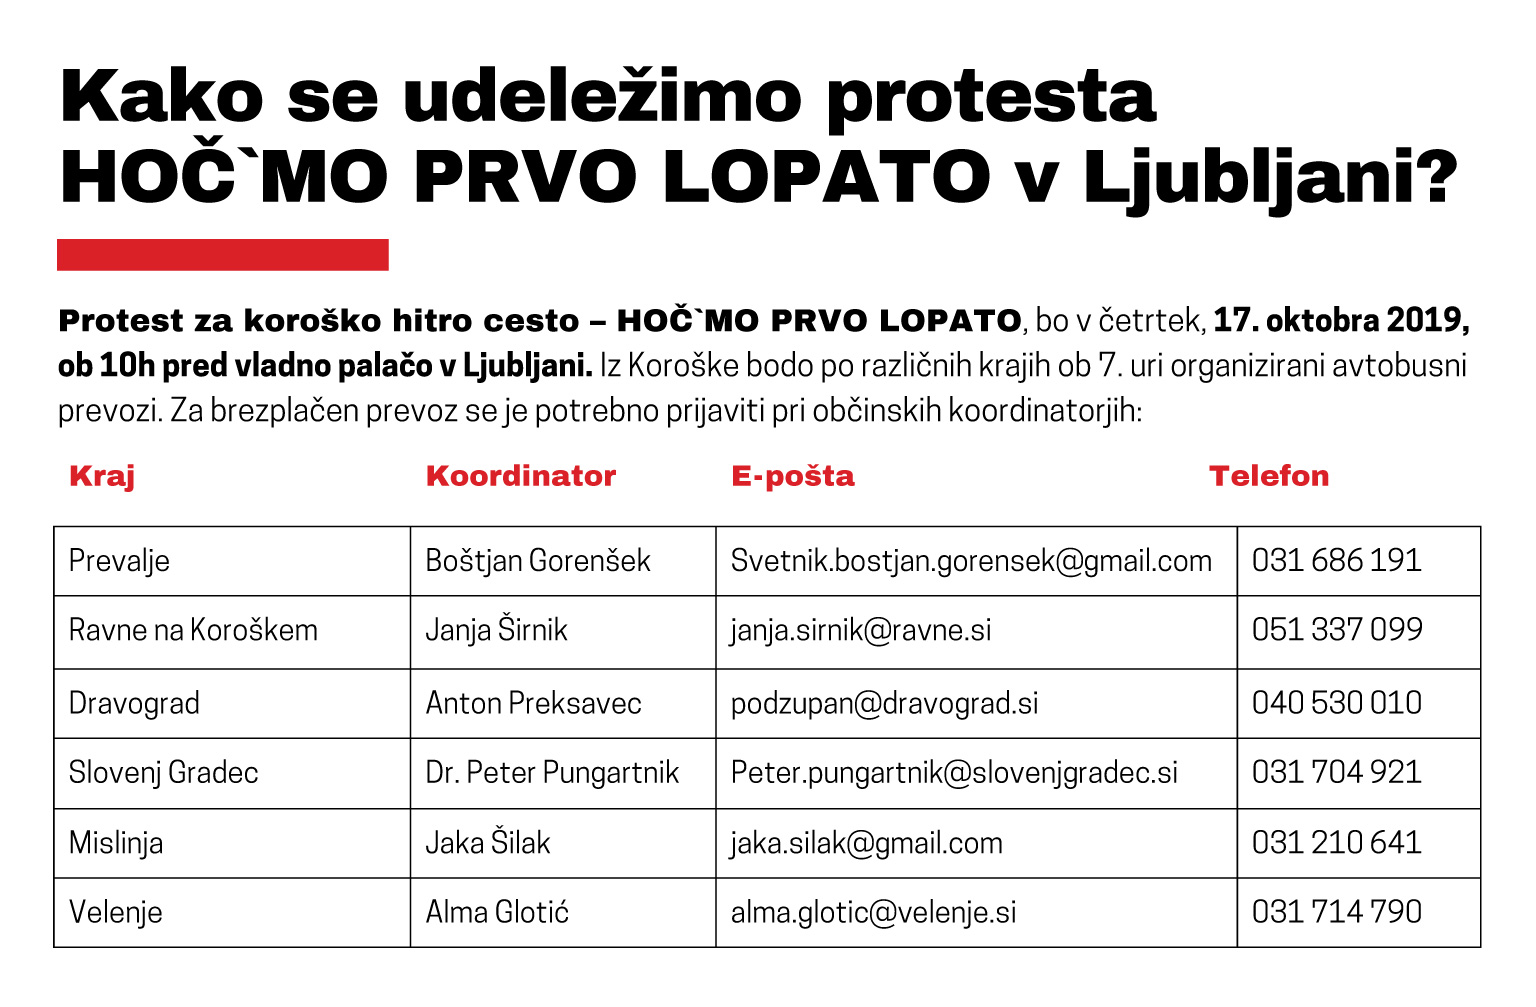 Protest2019-tabela.jpg